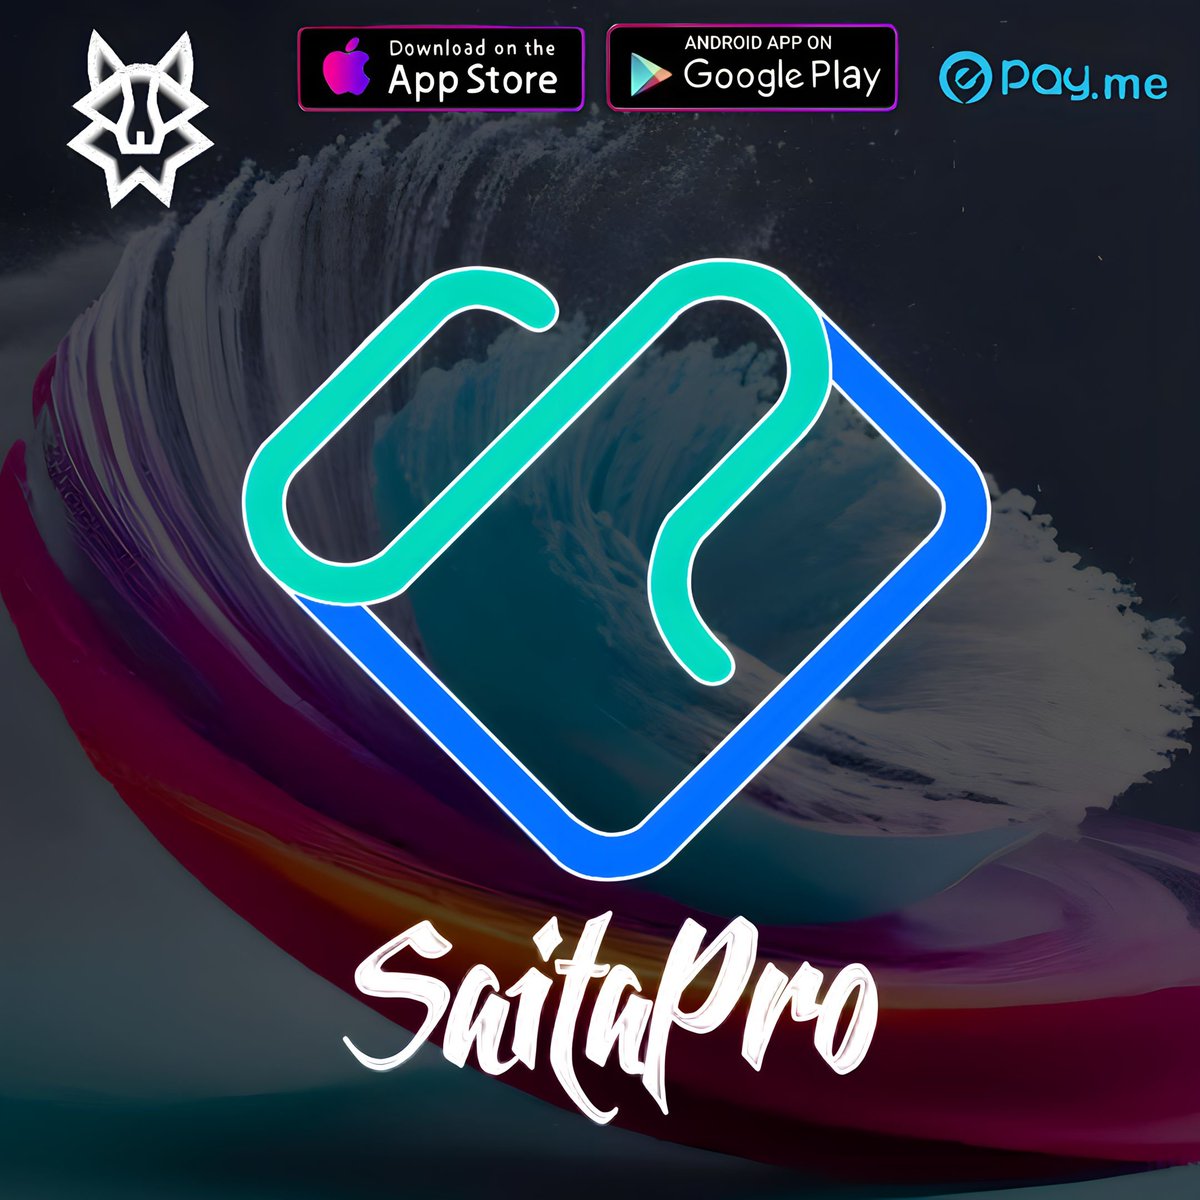 🤷‍♂️😁👇🏻👁
#Saitama #SaitaPro #SaitaCard #SaitaRealty #DeFi #cryptocurrency #SaitamaWolfPack #SAITAMACOMMUNITY #FANGART #Epayme